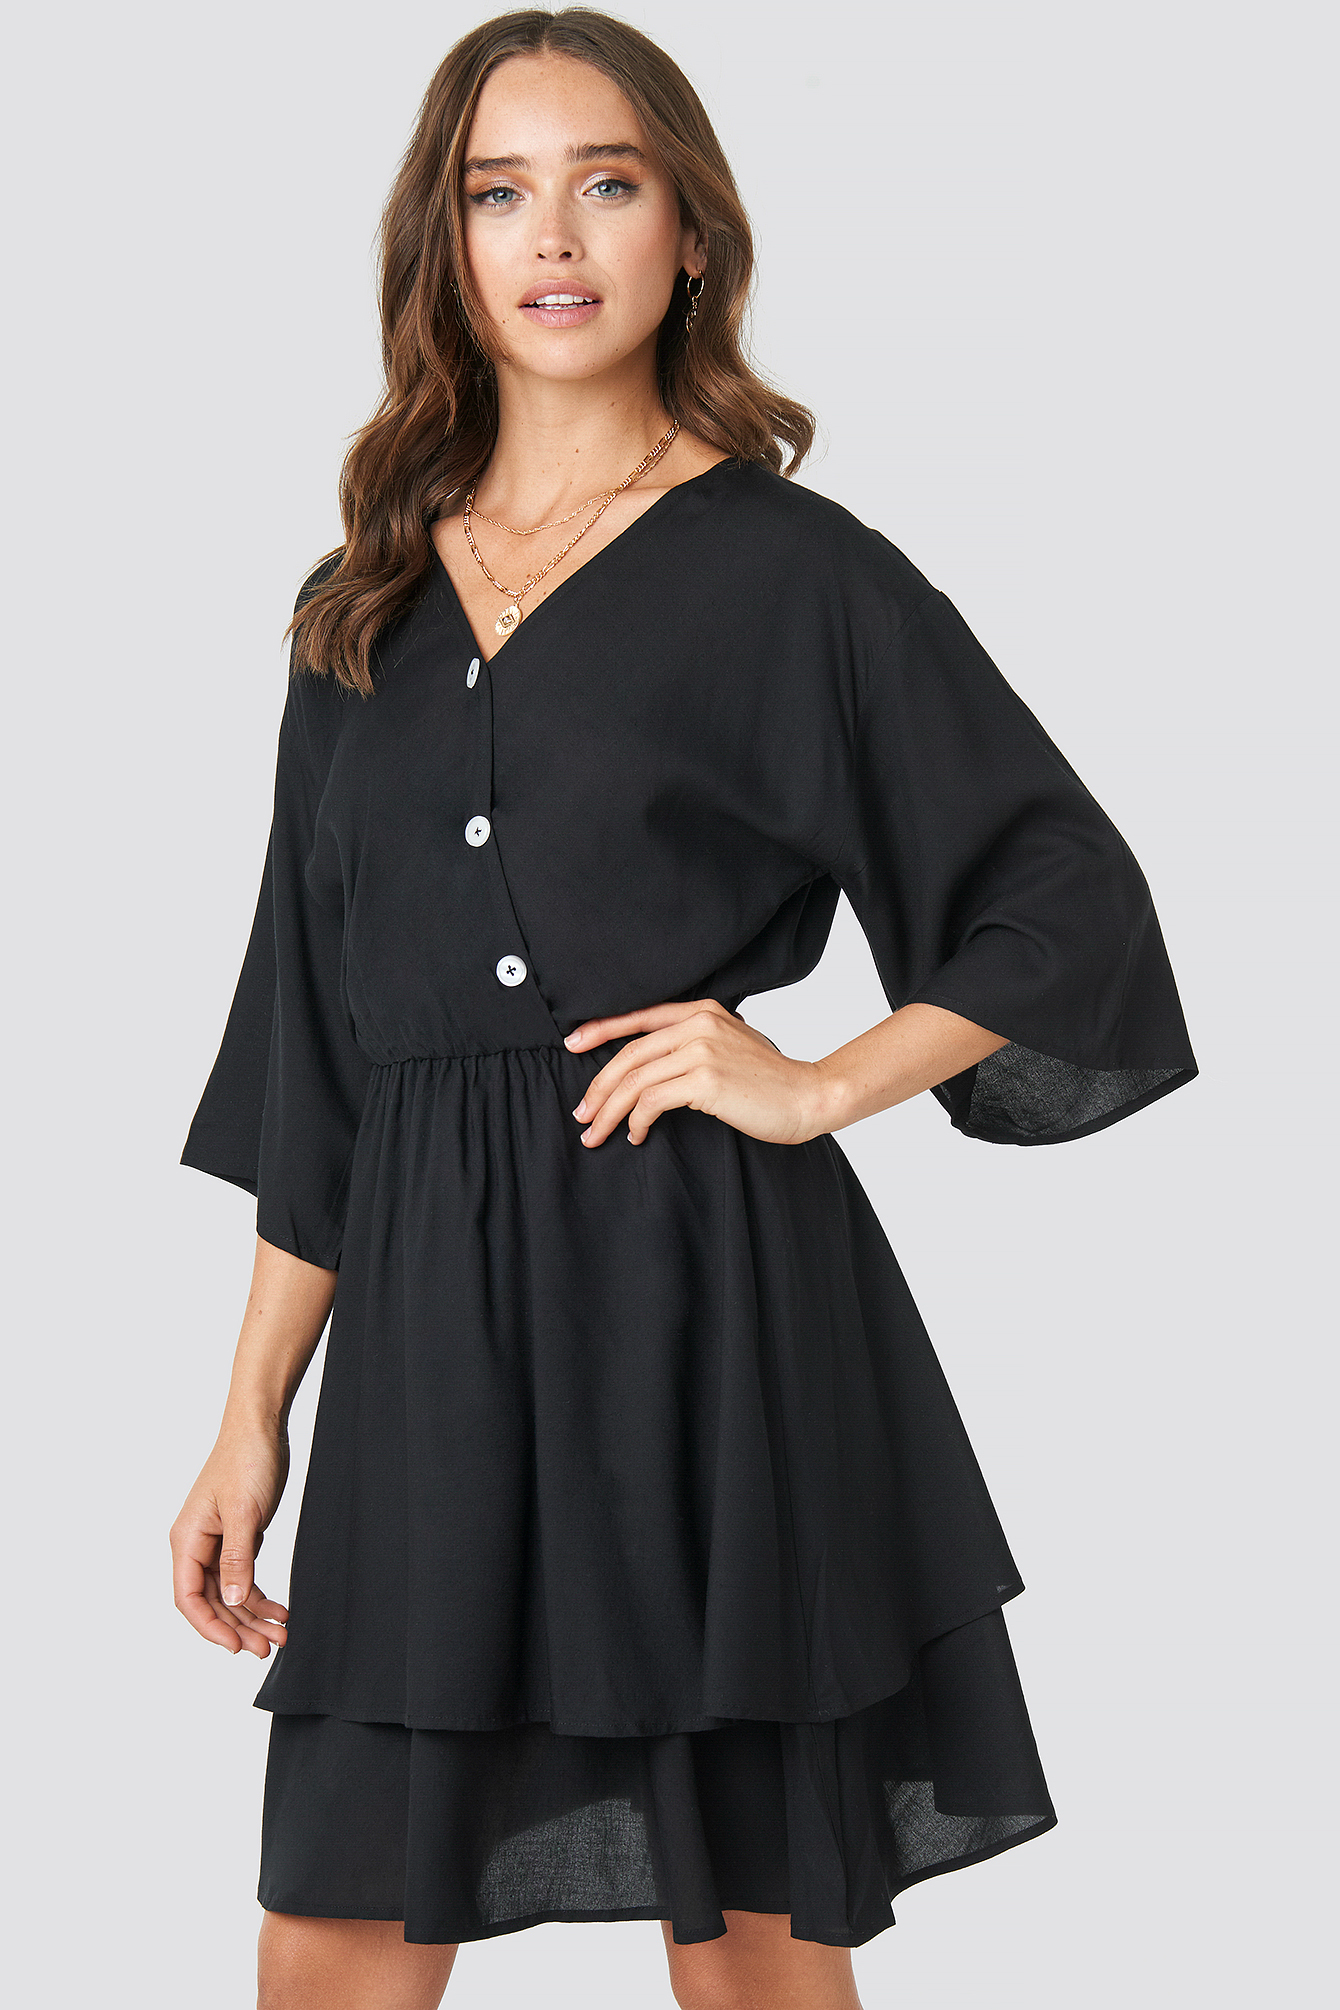 Black Contrast Button Layered Dress